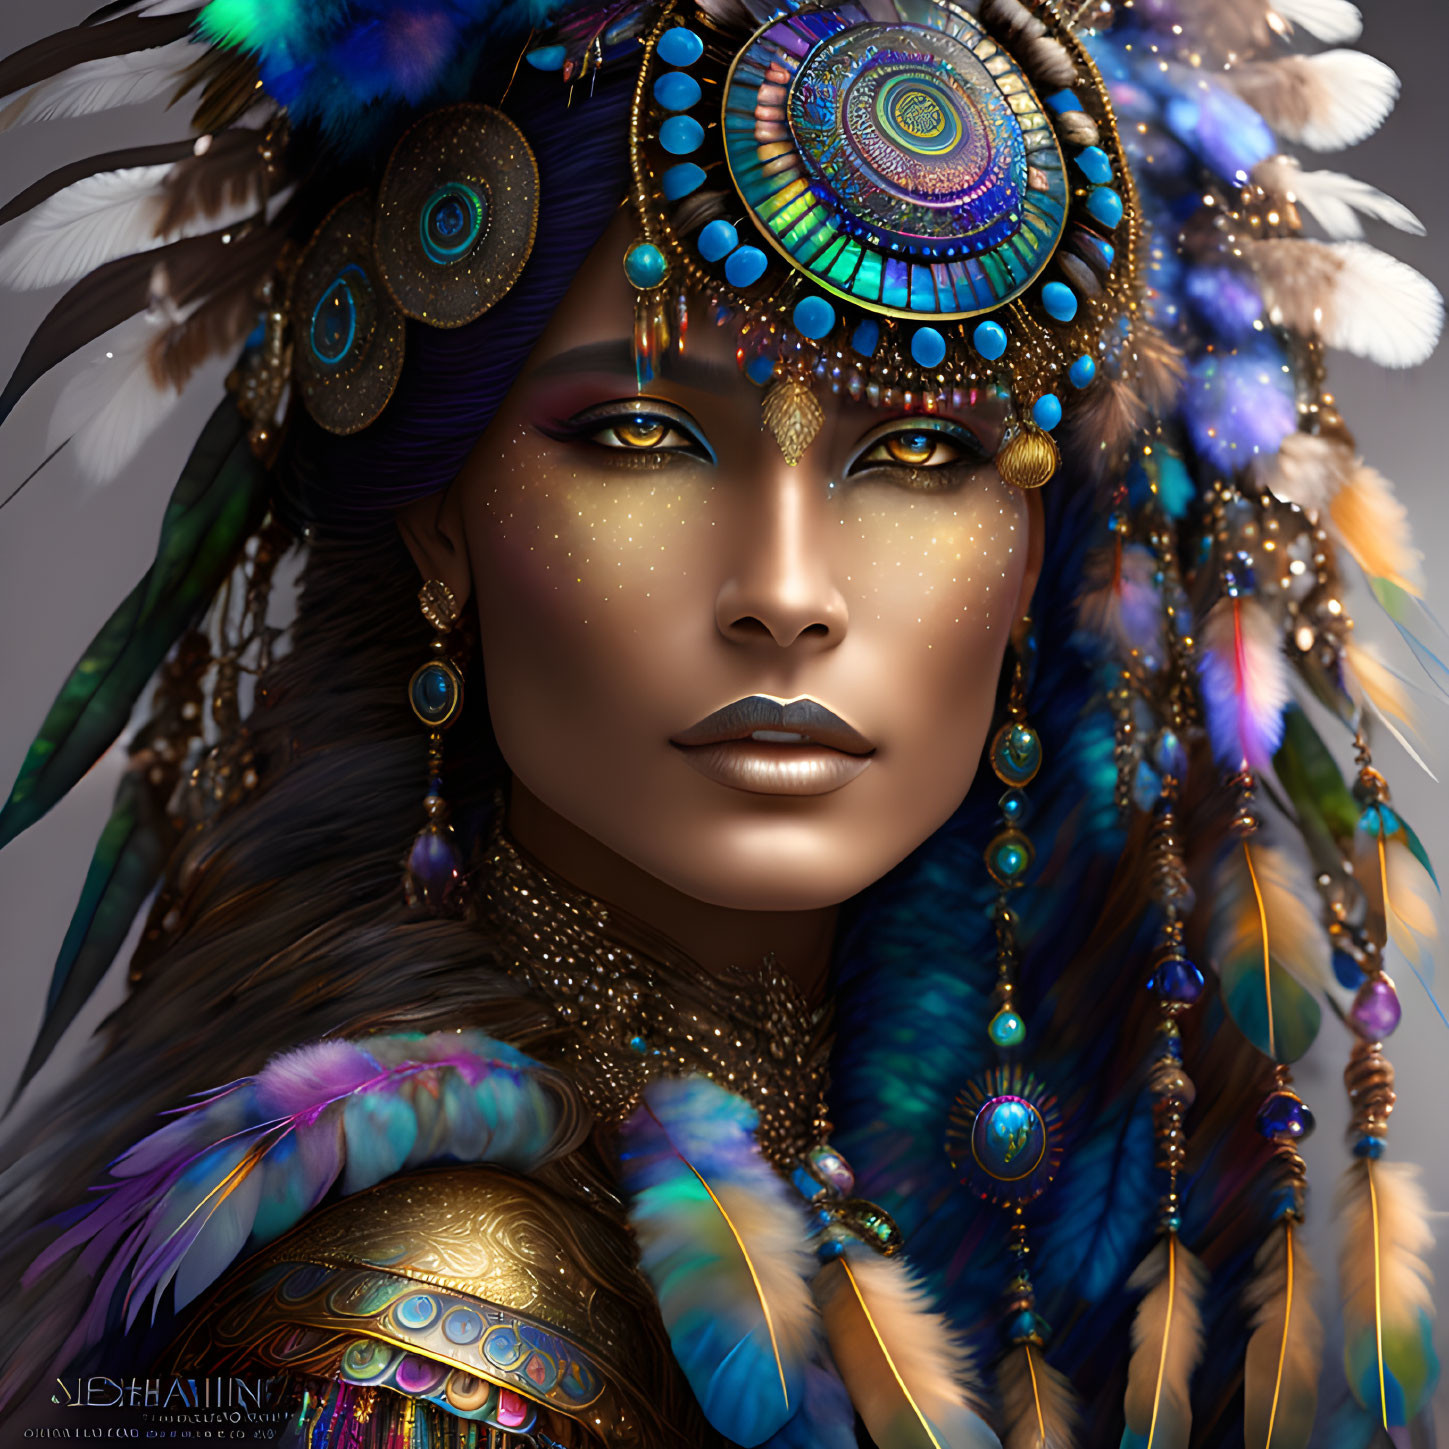 Vibrant feather headdress and regal aura in digital portrait